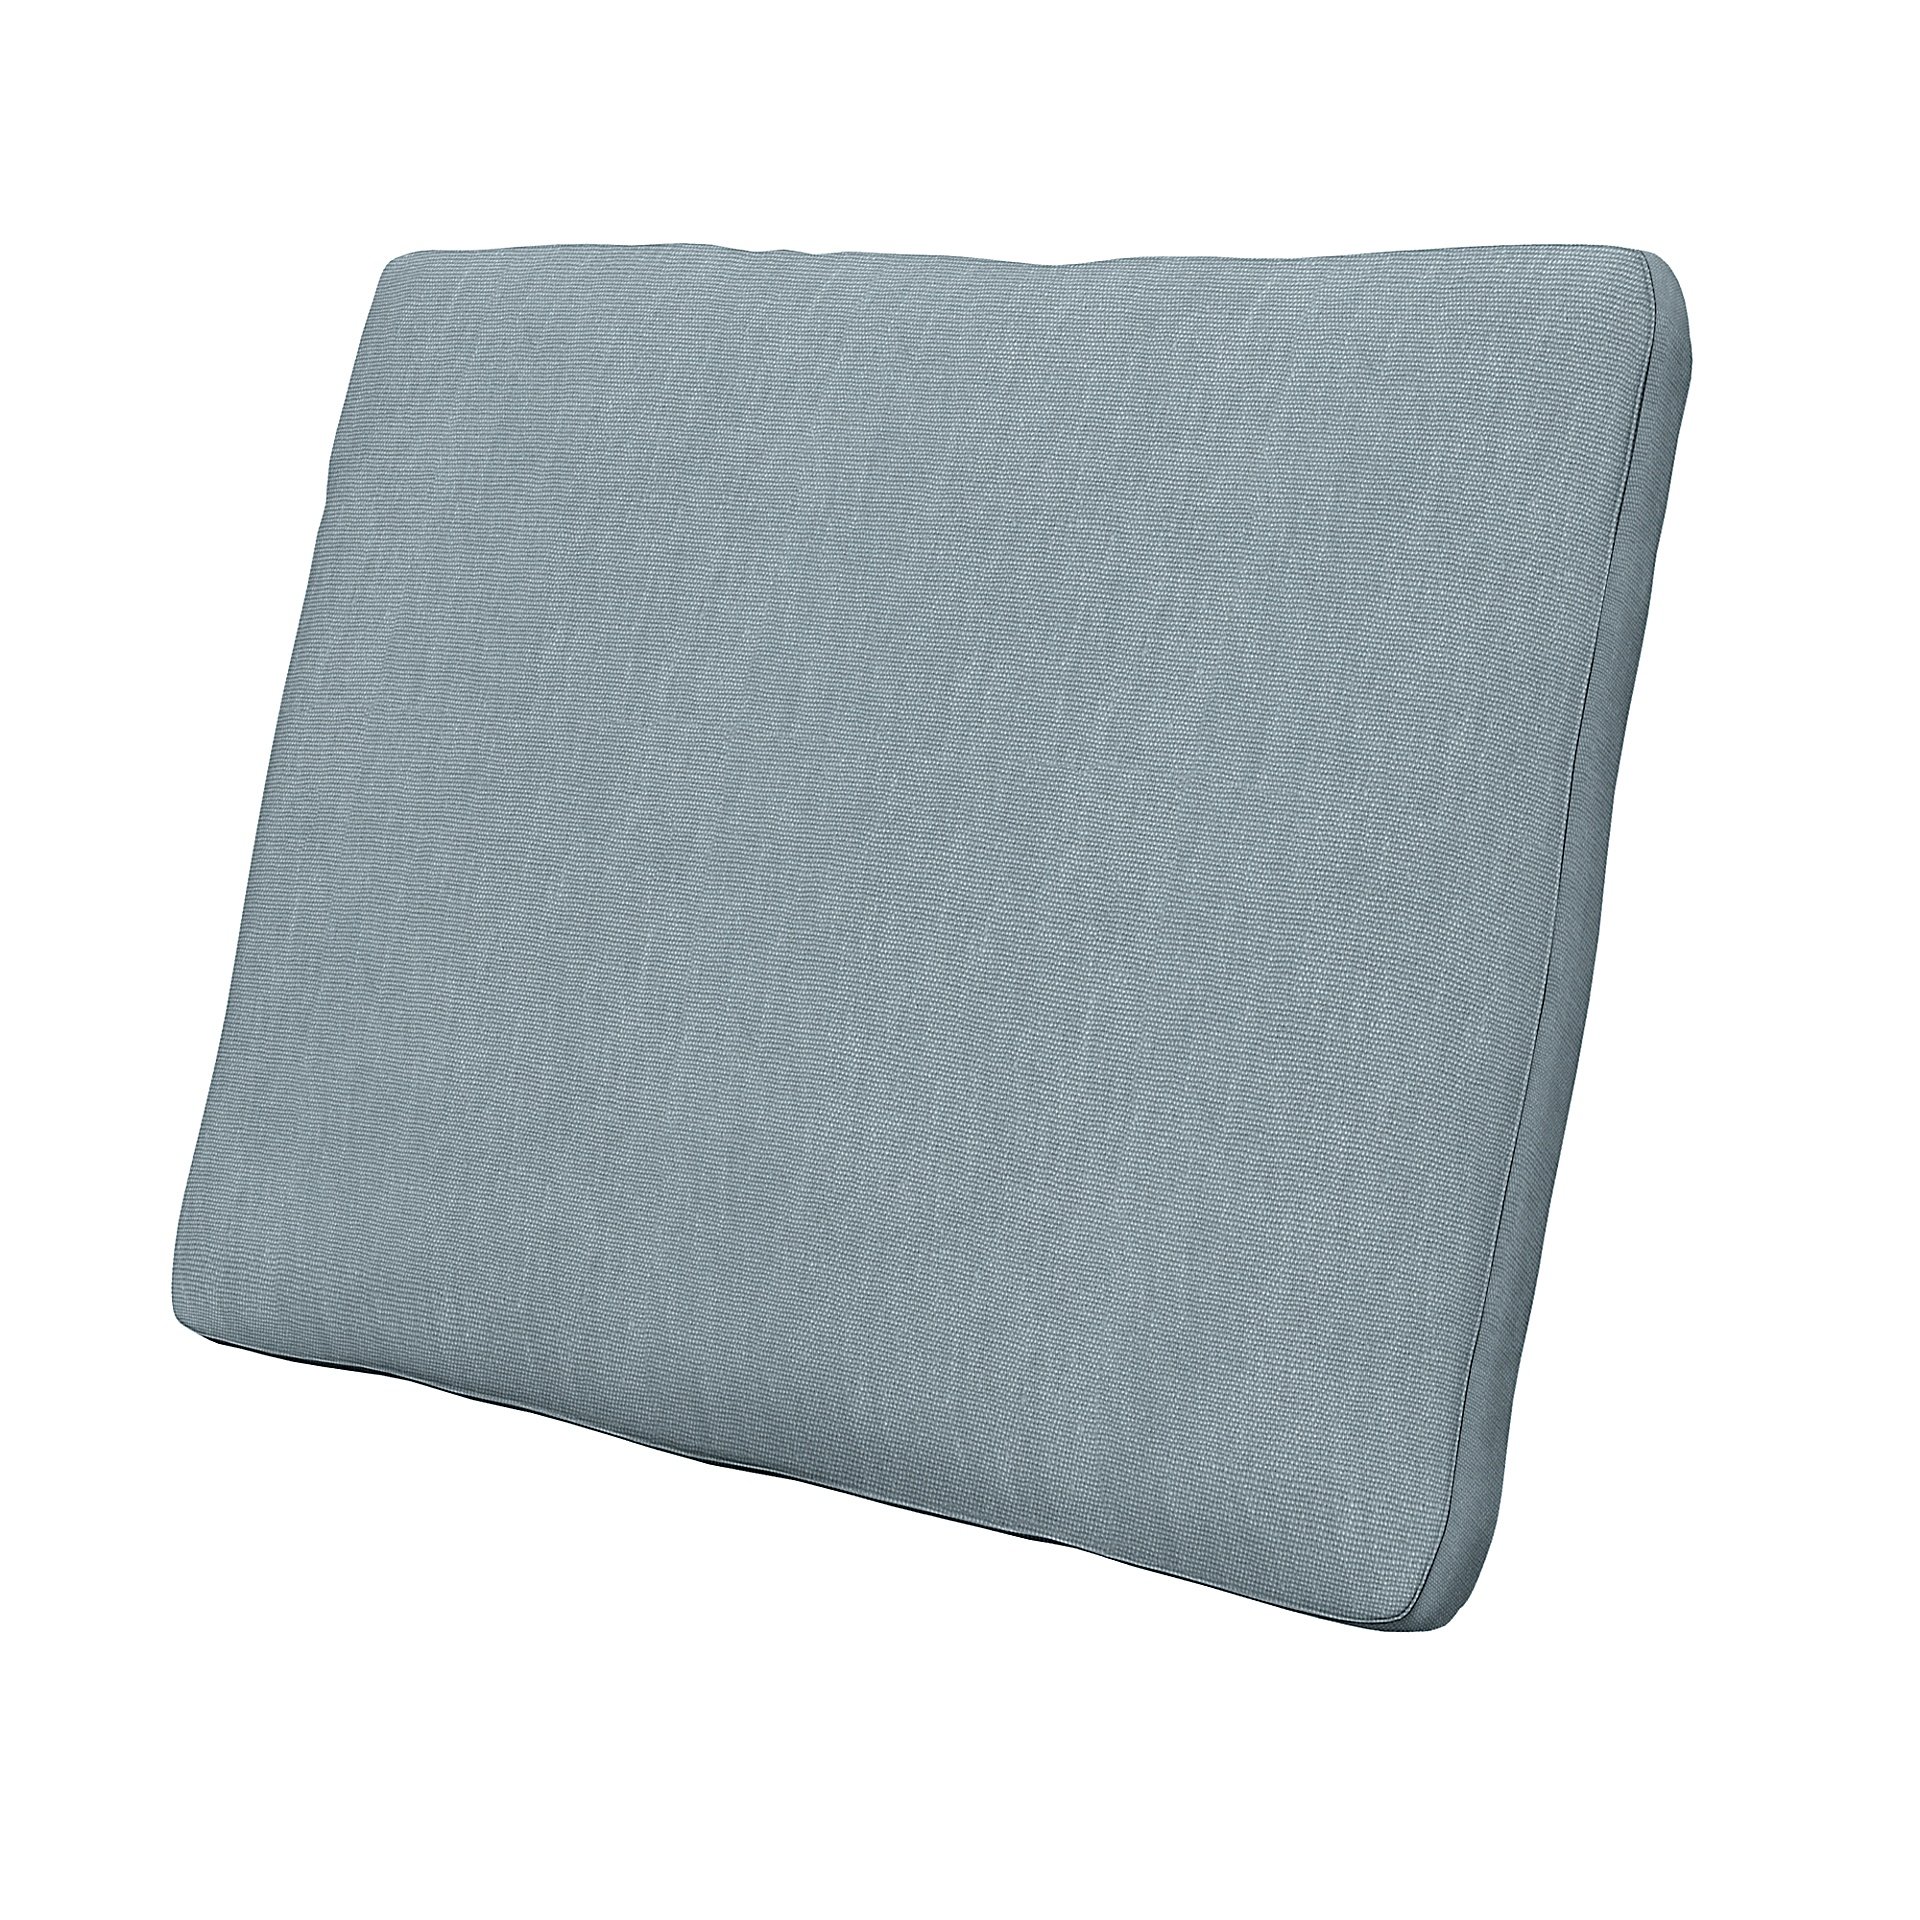 IKEA - Cushion Cover Karlstad 58x48x5 cm, Dusty Blue, Linen - Bemz